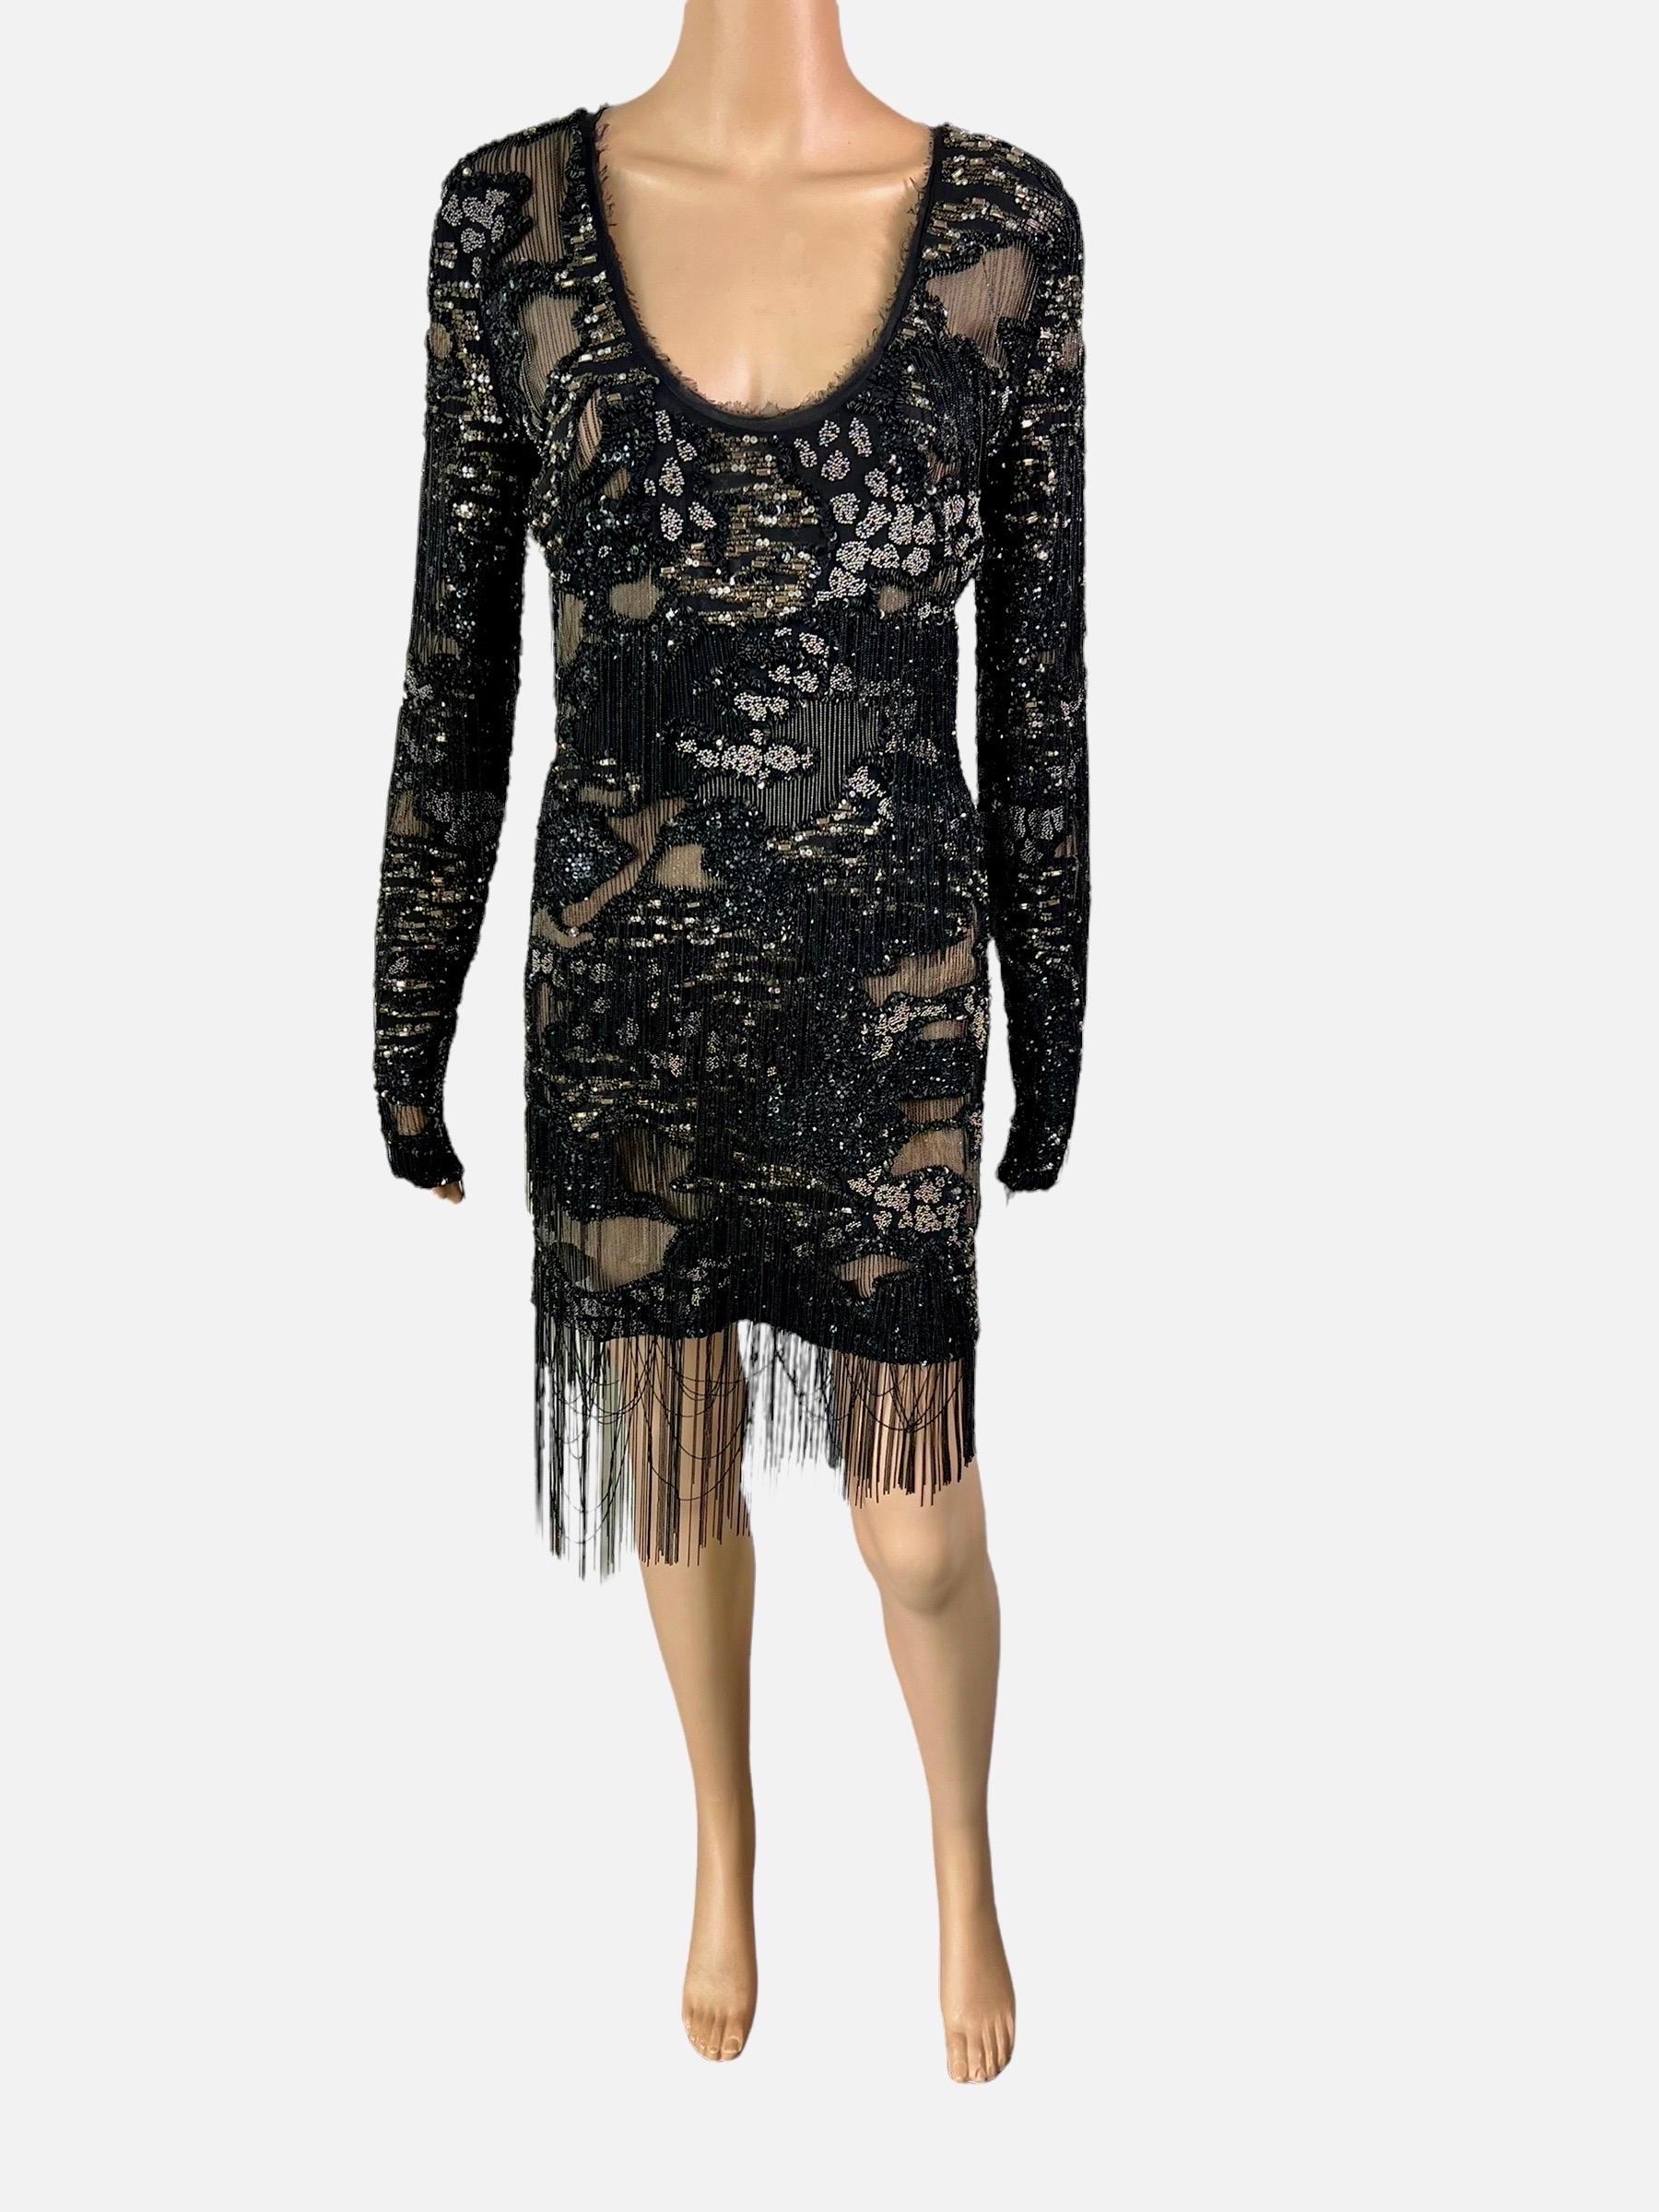 Roberto Cavalli S/S 2016 Runway Embellished Chain Sheer Black Mini Evening Dress For Sale 1